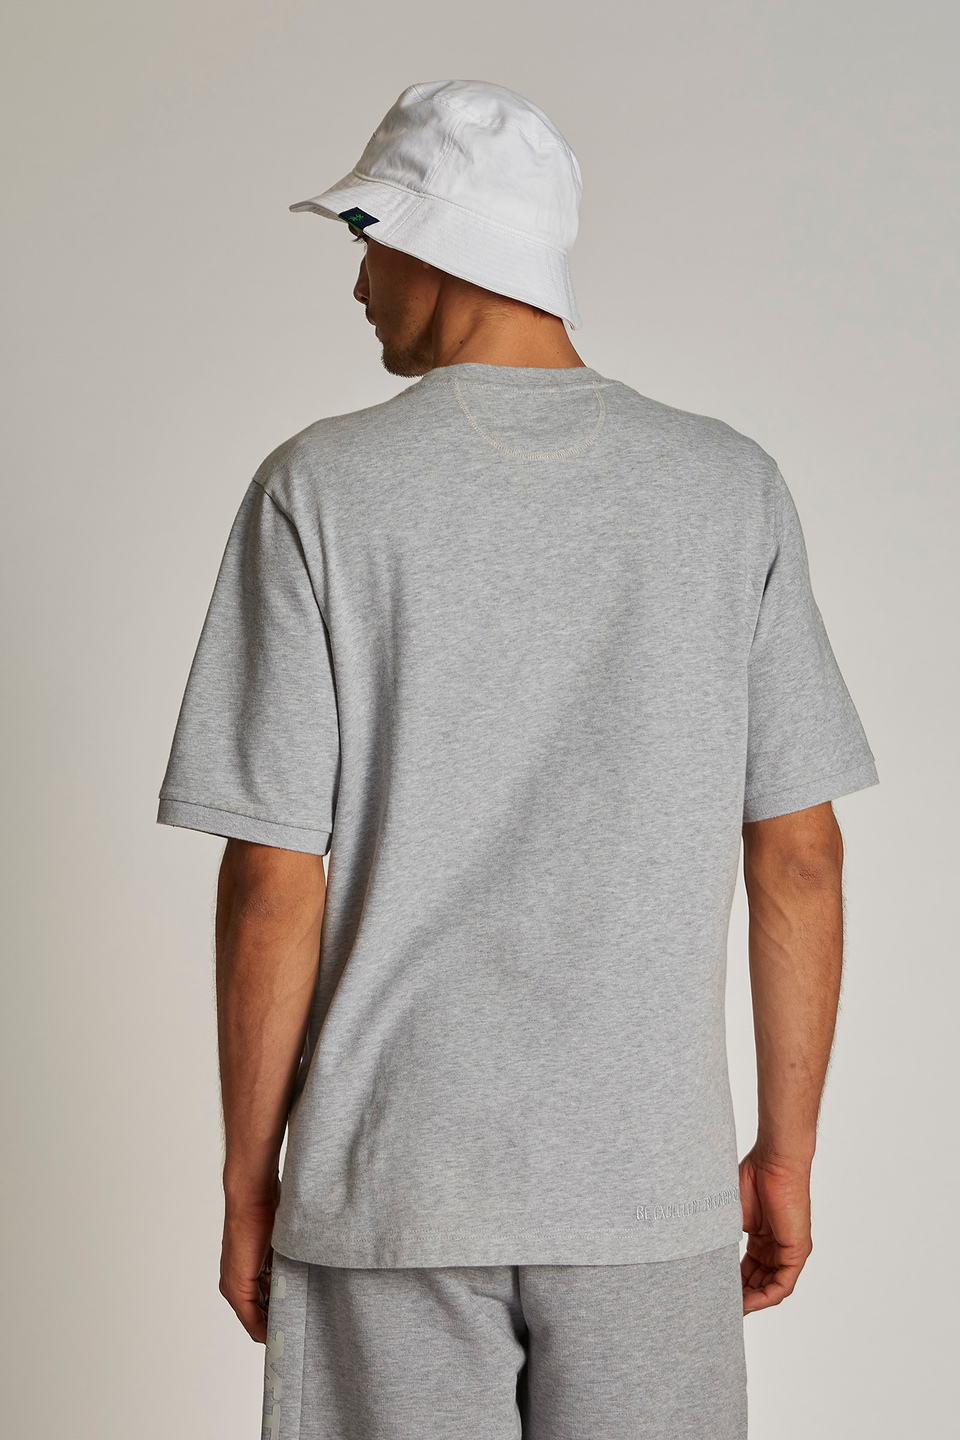 Herren-T-Shirt mit kurzem Arm aus Baumwolle, oversized Modell - La Martina - Official Online Shop